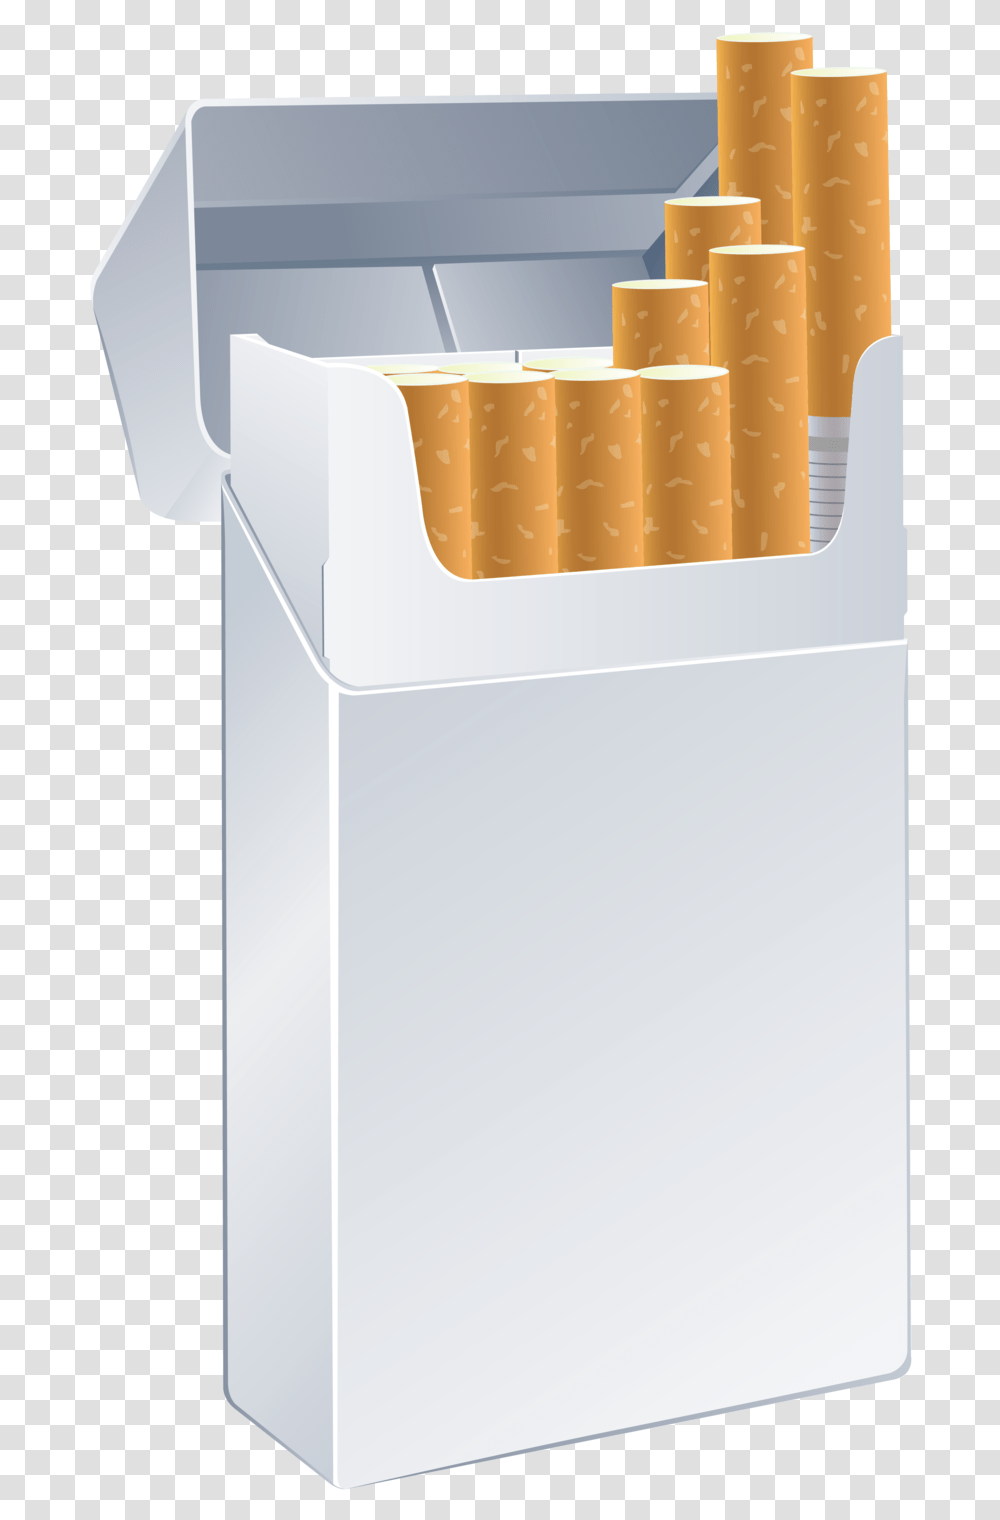 Cigarette Box Template Clipart Cigarette Template, Bread, Food, Appliance, Toast Transparent Png